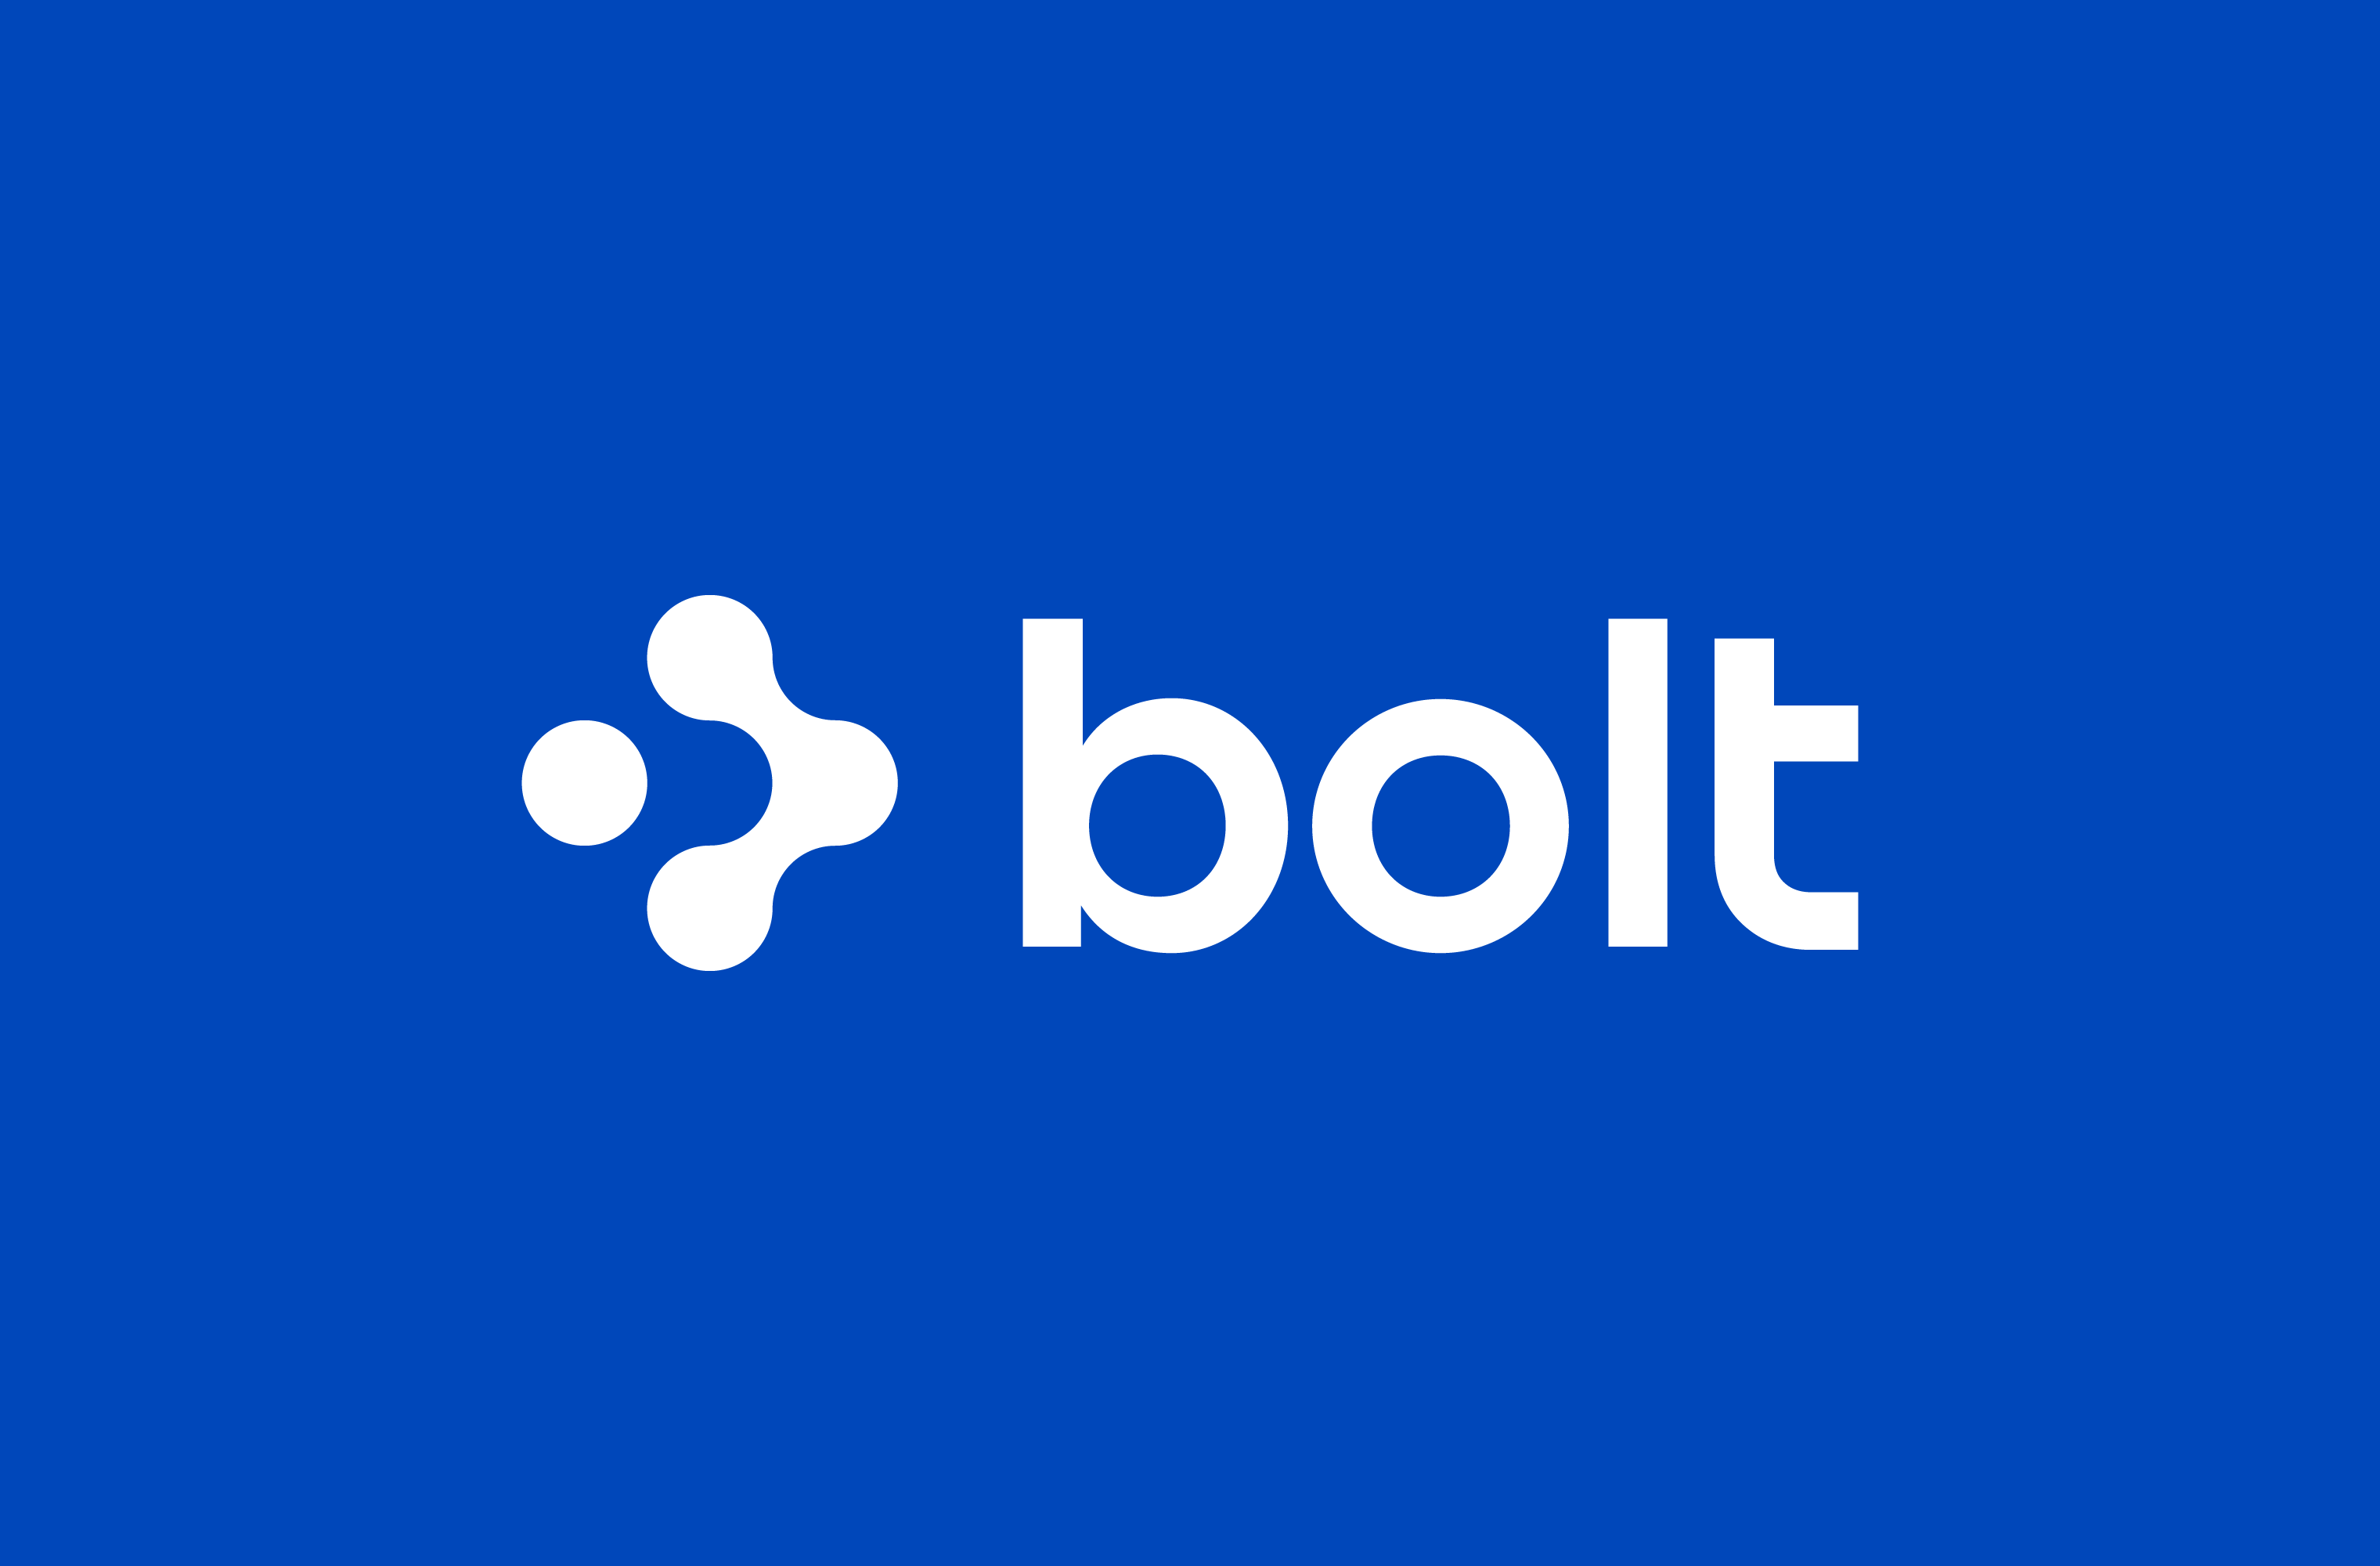 White Bolt logo on a blue background